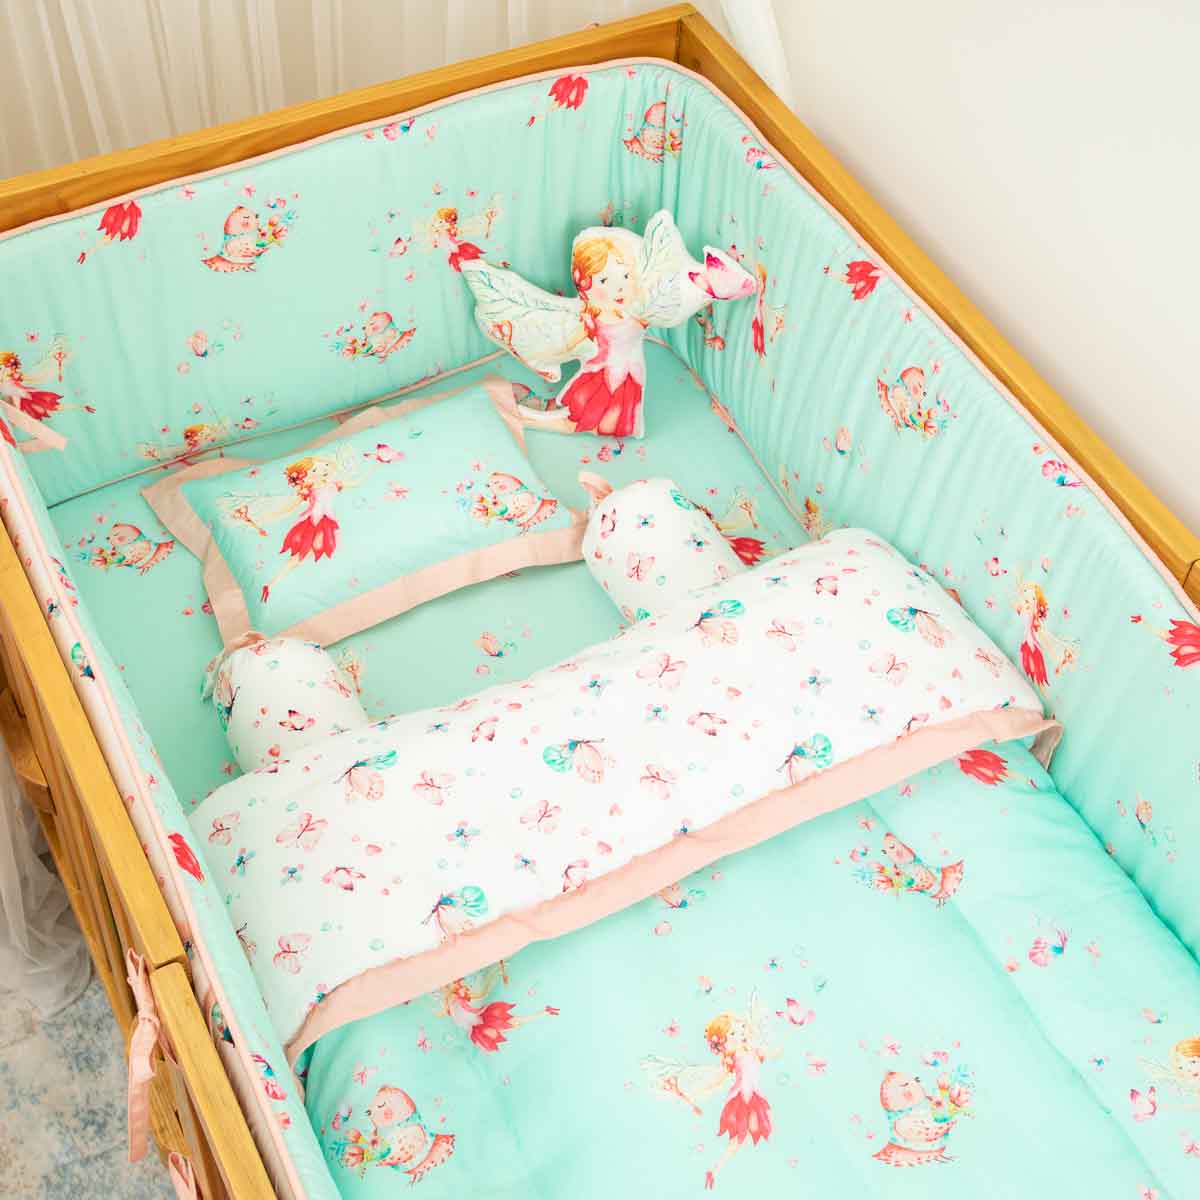 Fiora the Fairy - Cot Bedding Set